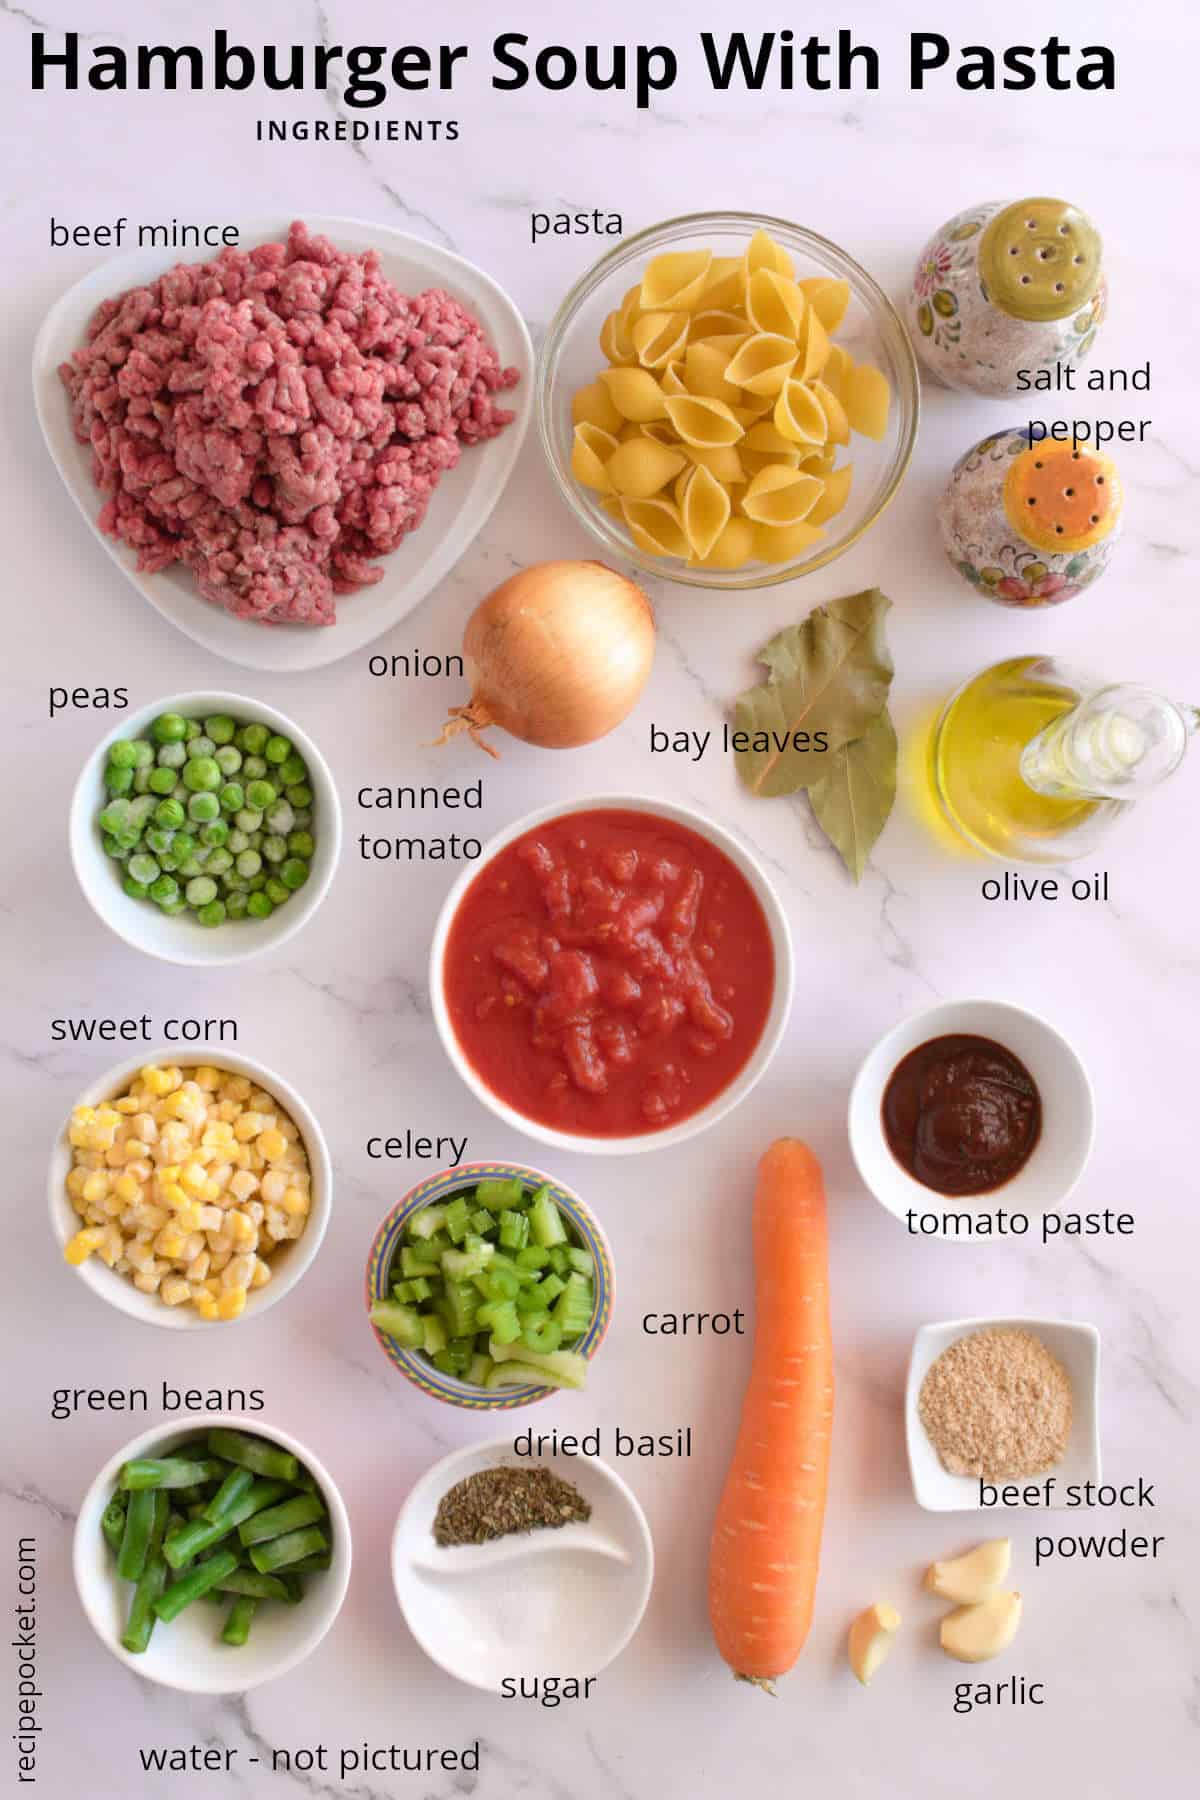 Ingredients image for hamburger soup with macaroni recipe.